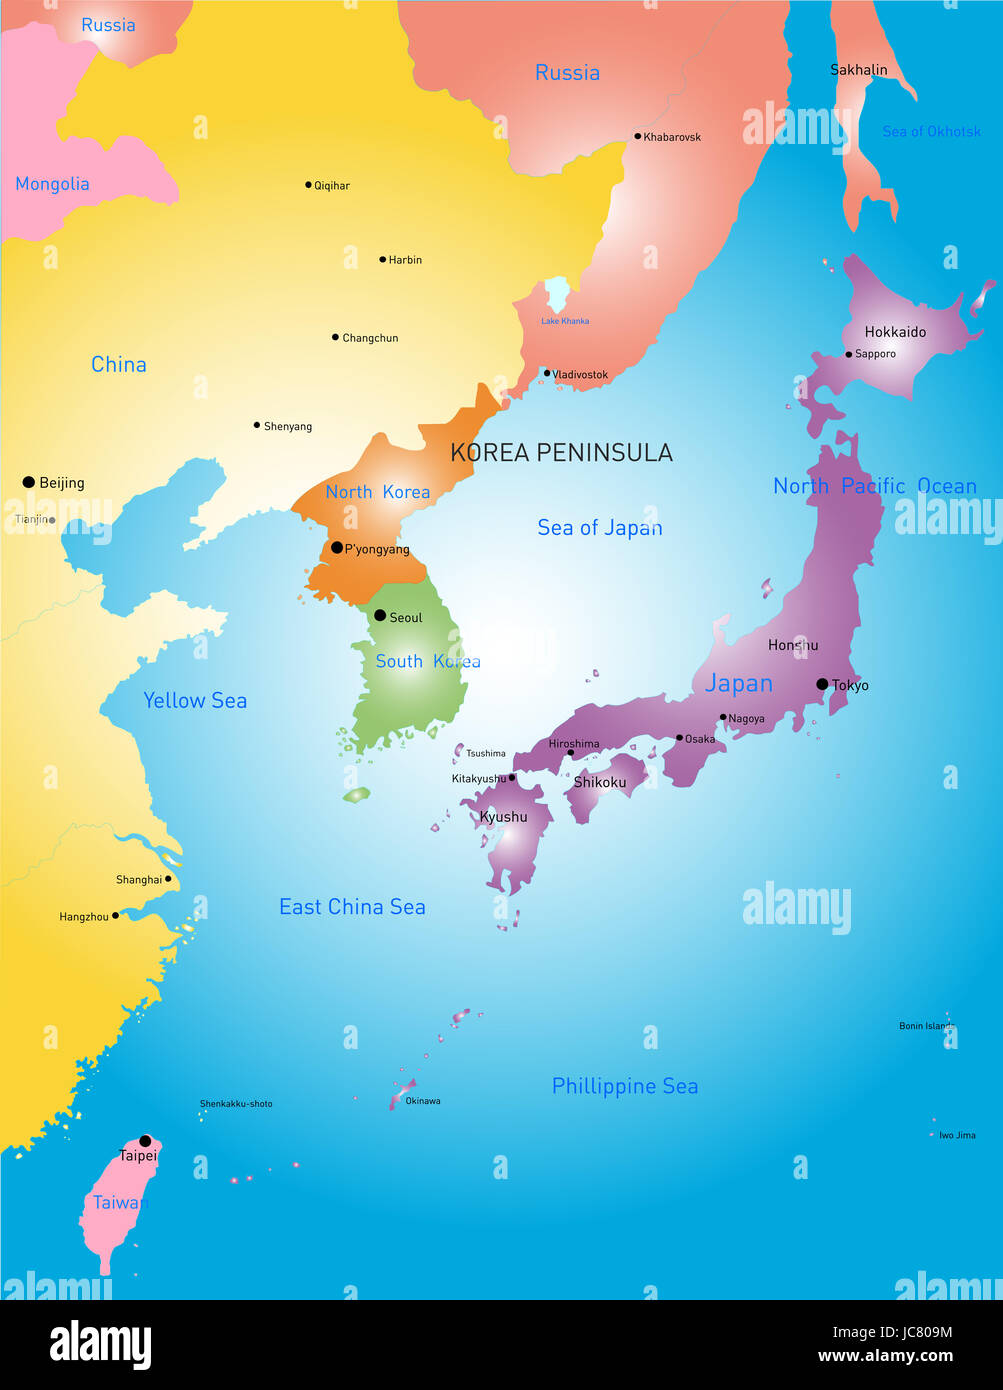 peninsula-de-corea-mapa-de-color-vectorial-jc809m.jpg